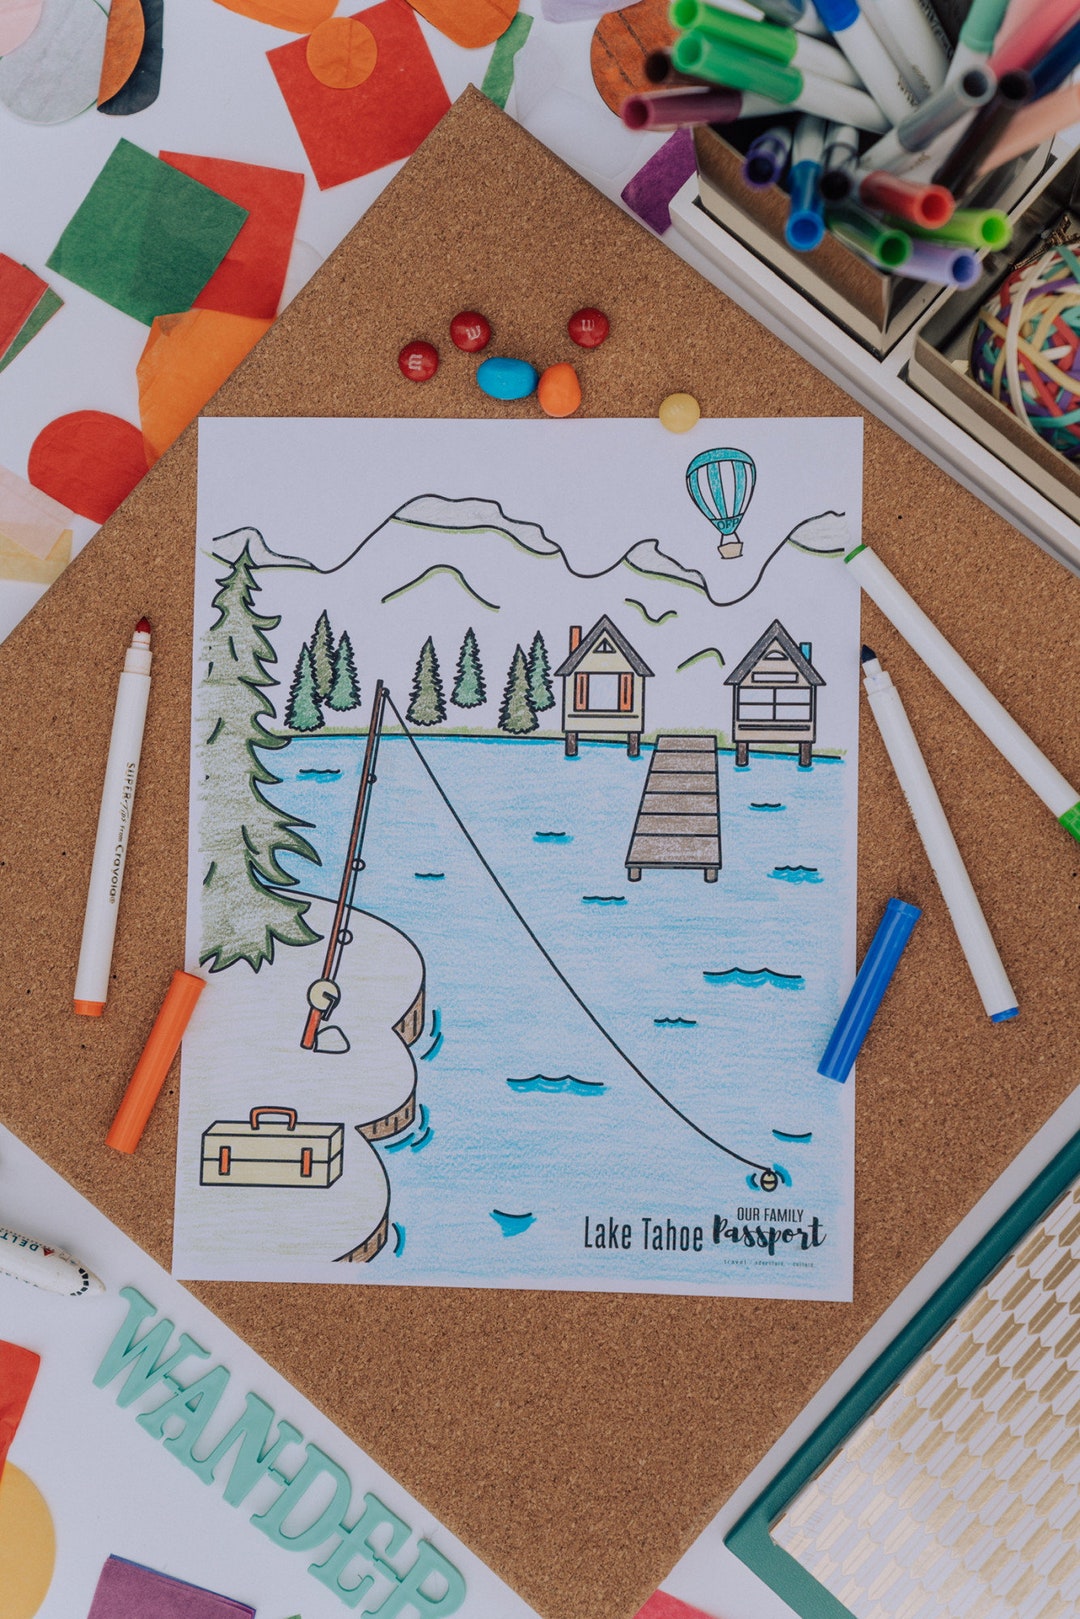 Lake tahoe usa coloring page download now